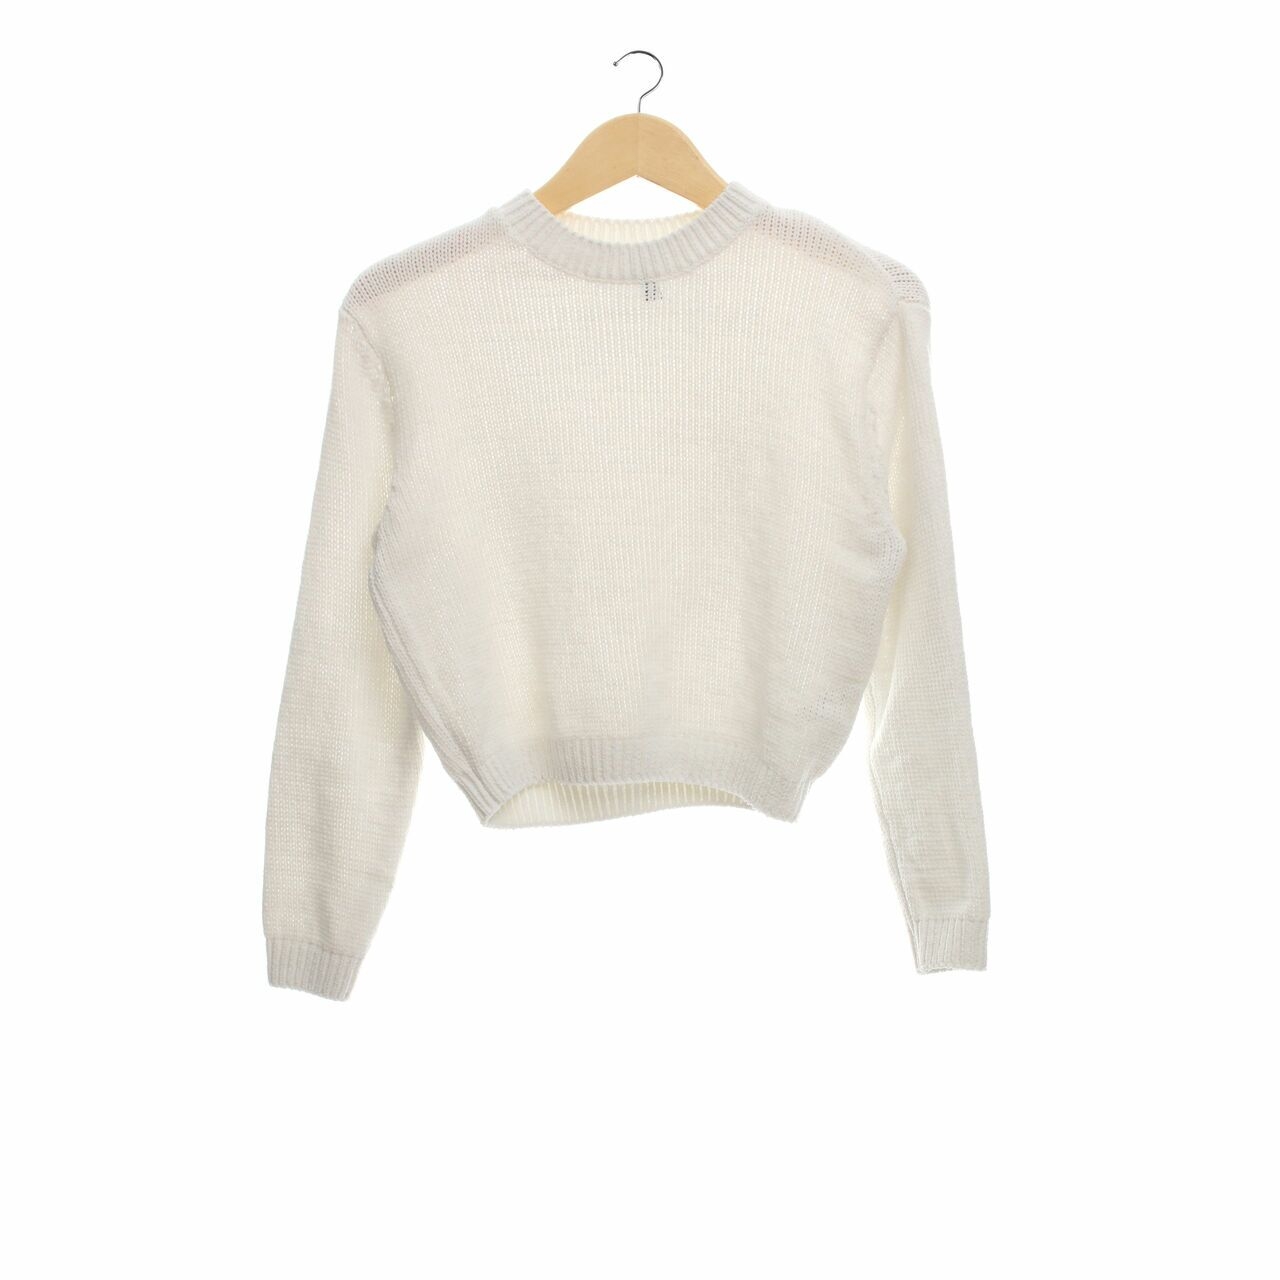 H&M White Sweater